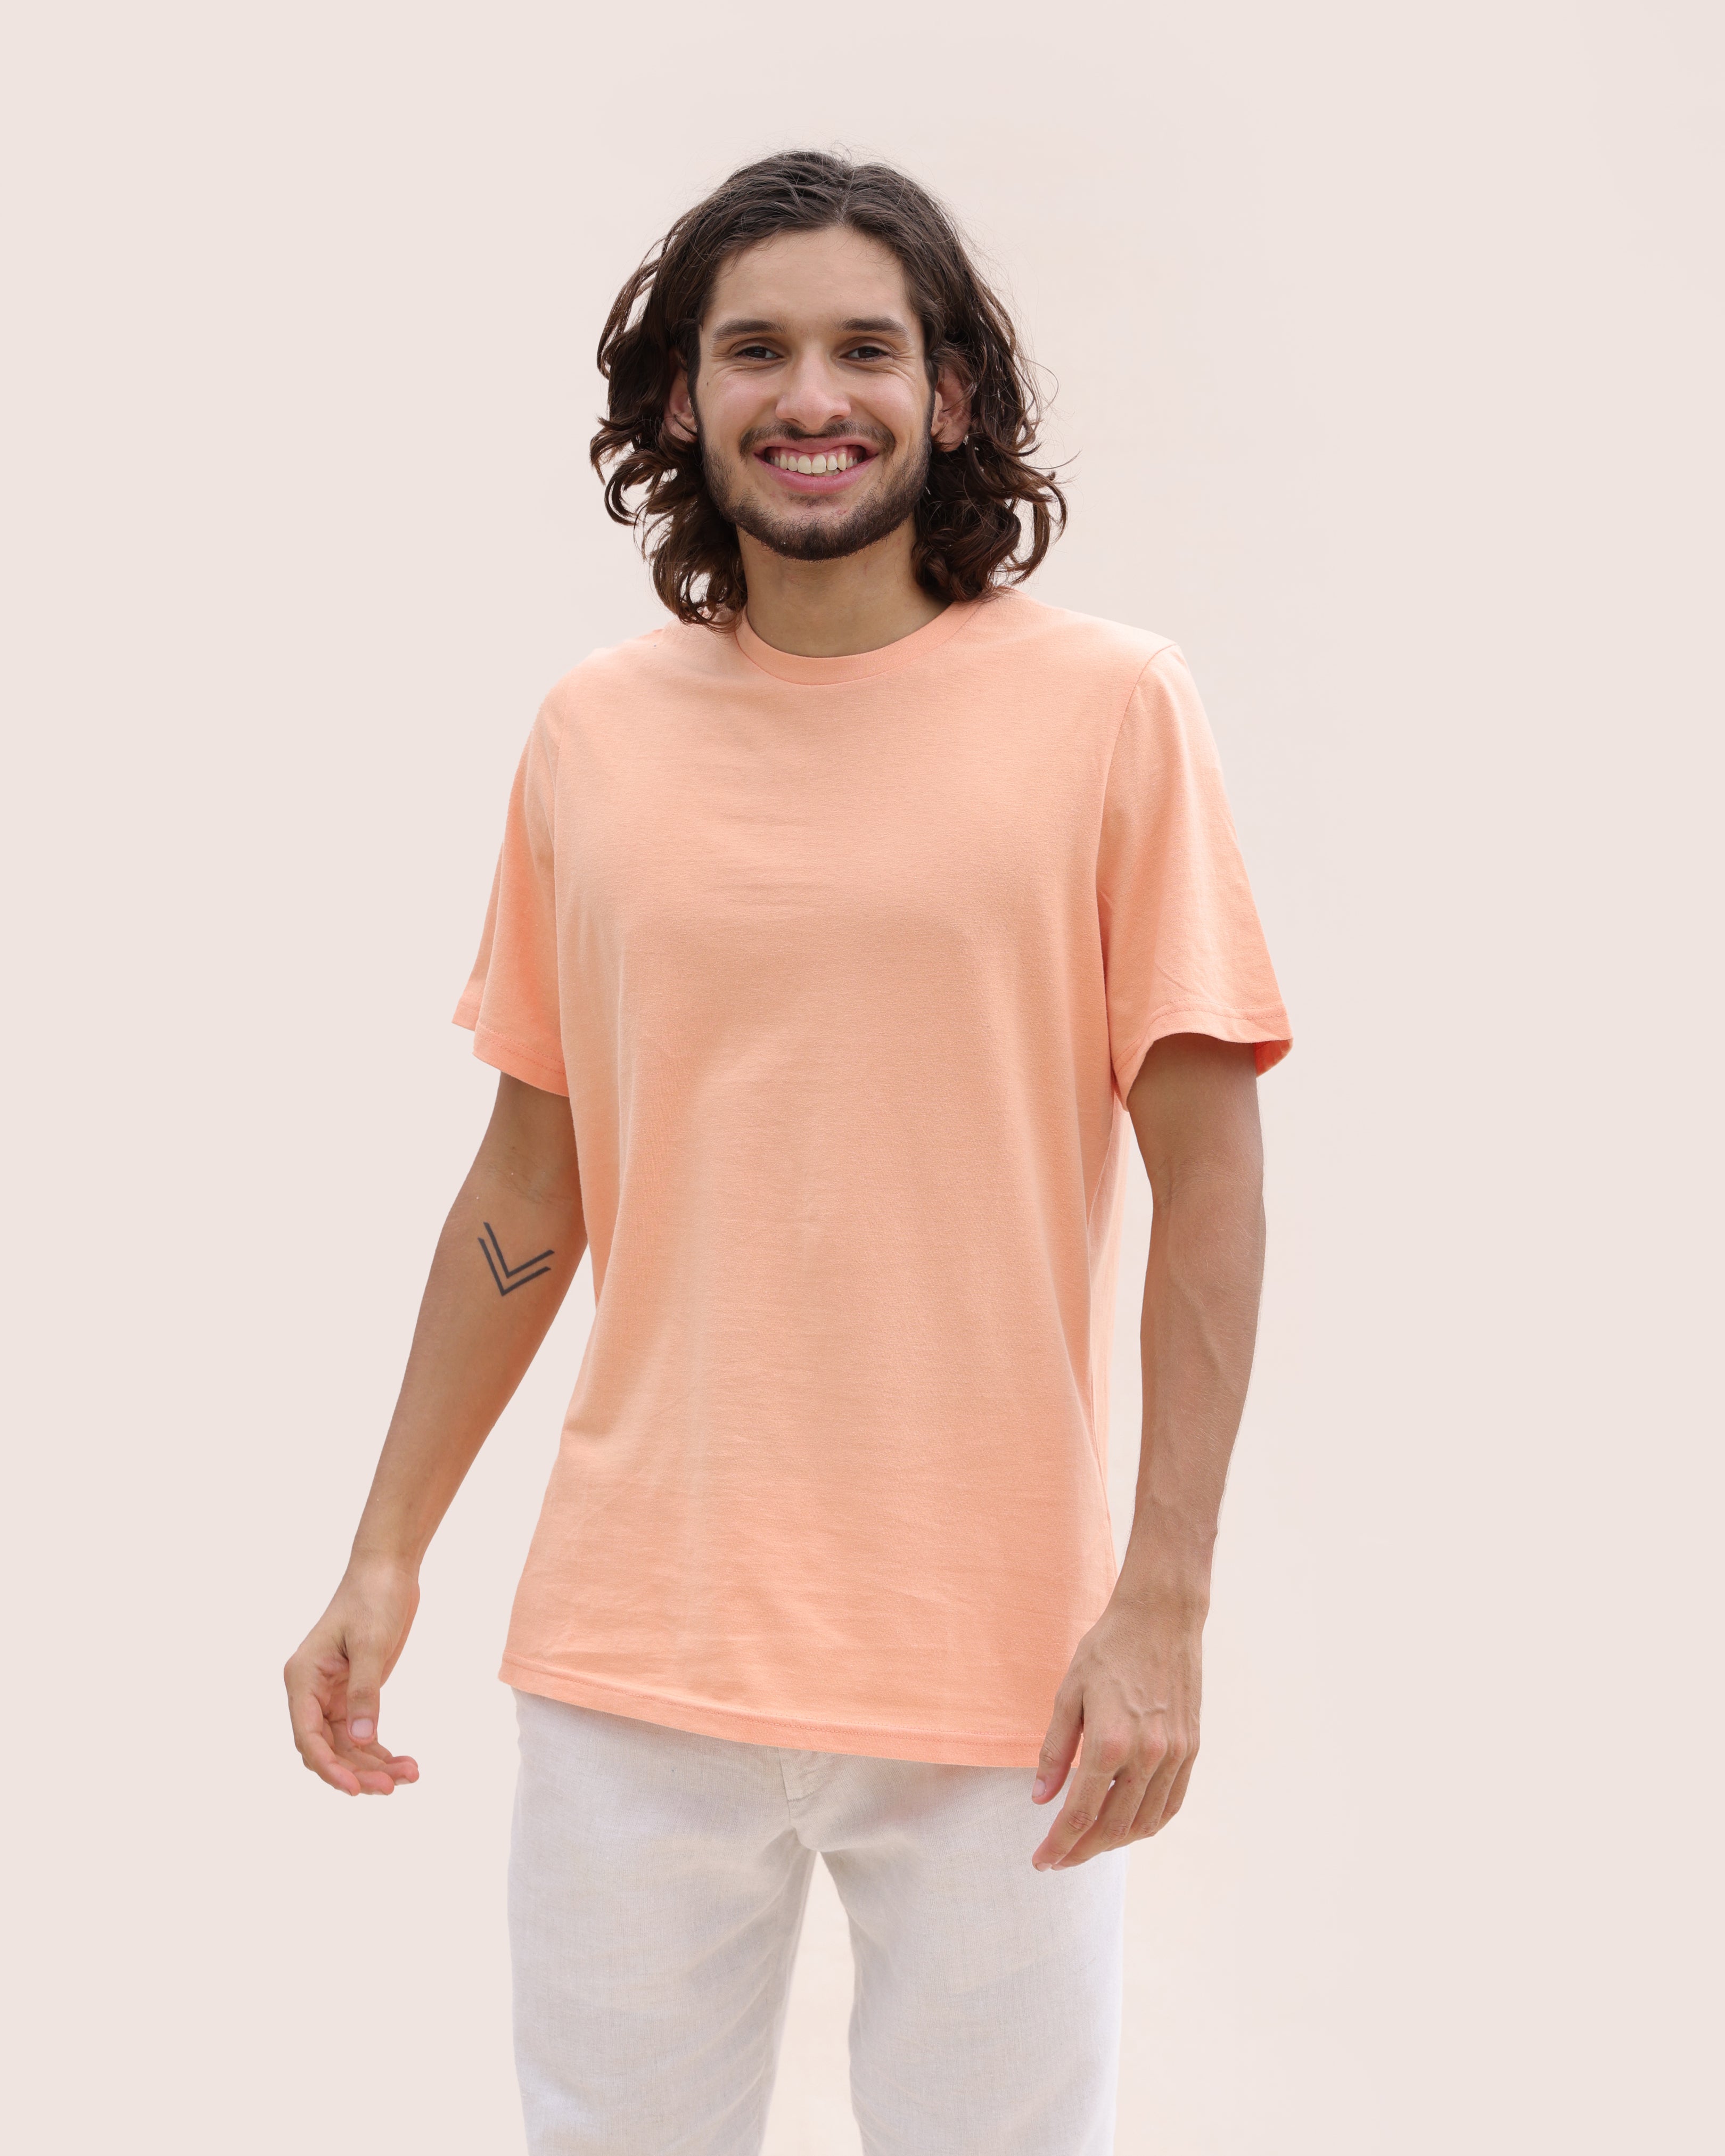 Peach Fuzz T-shirt - Orange